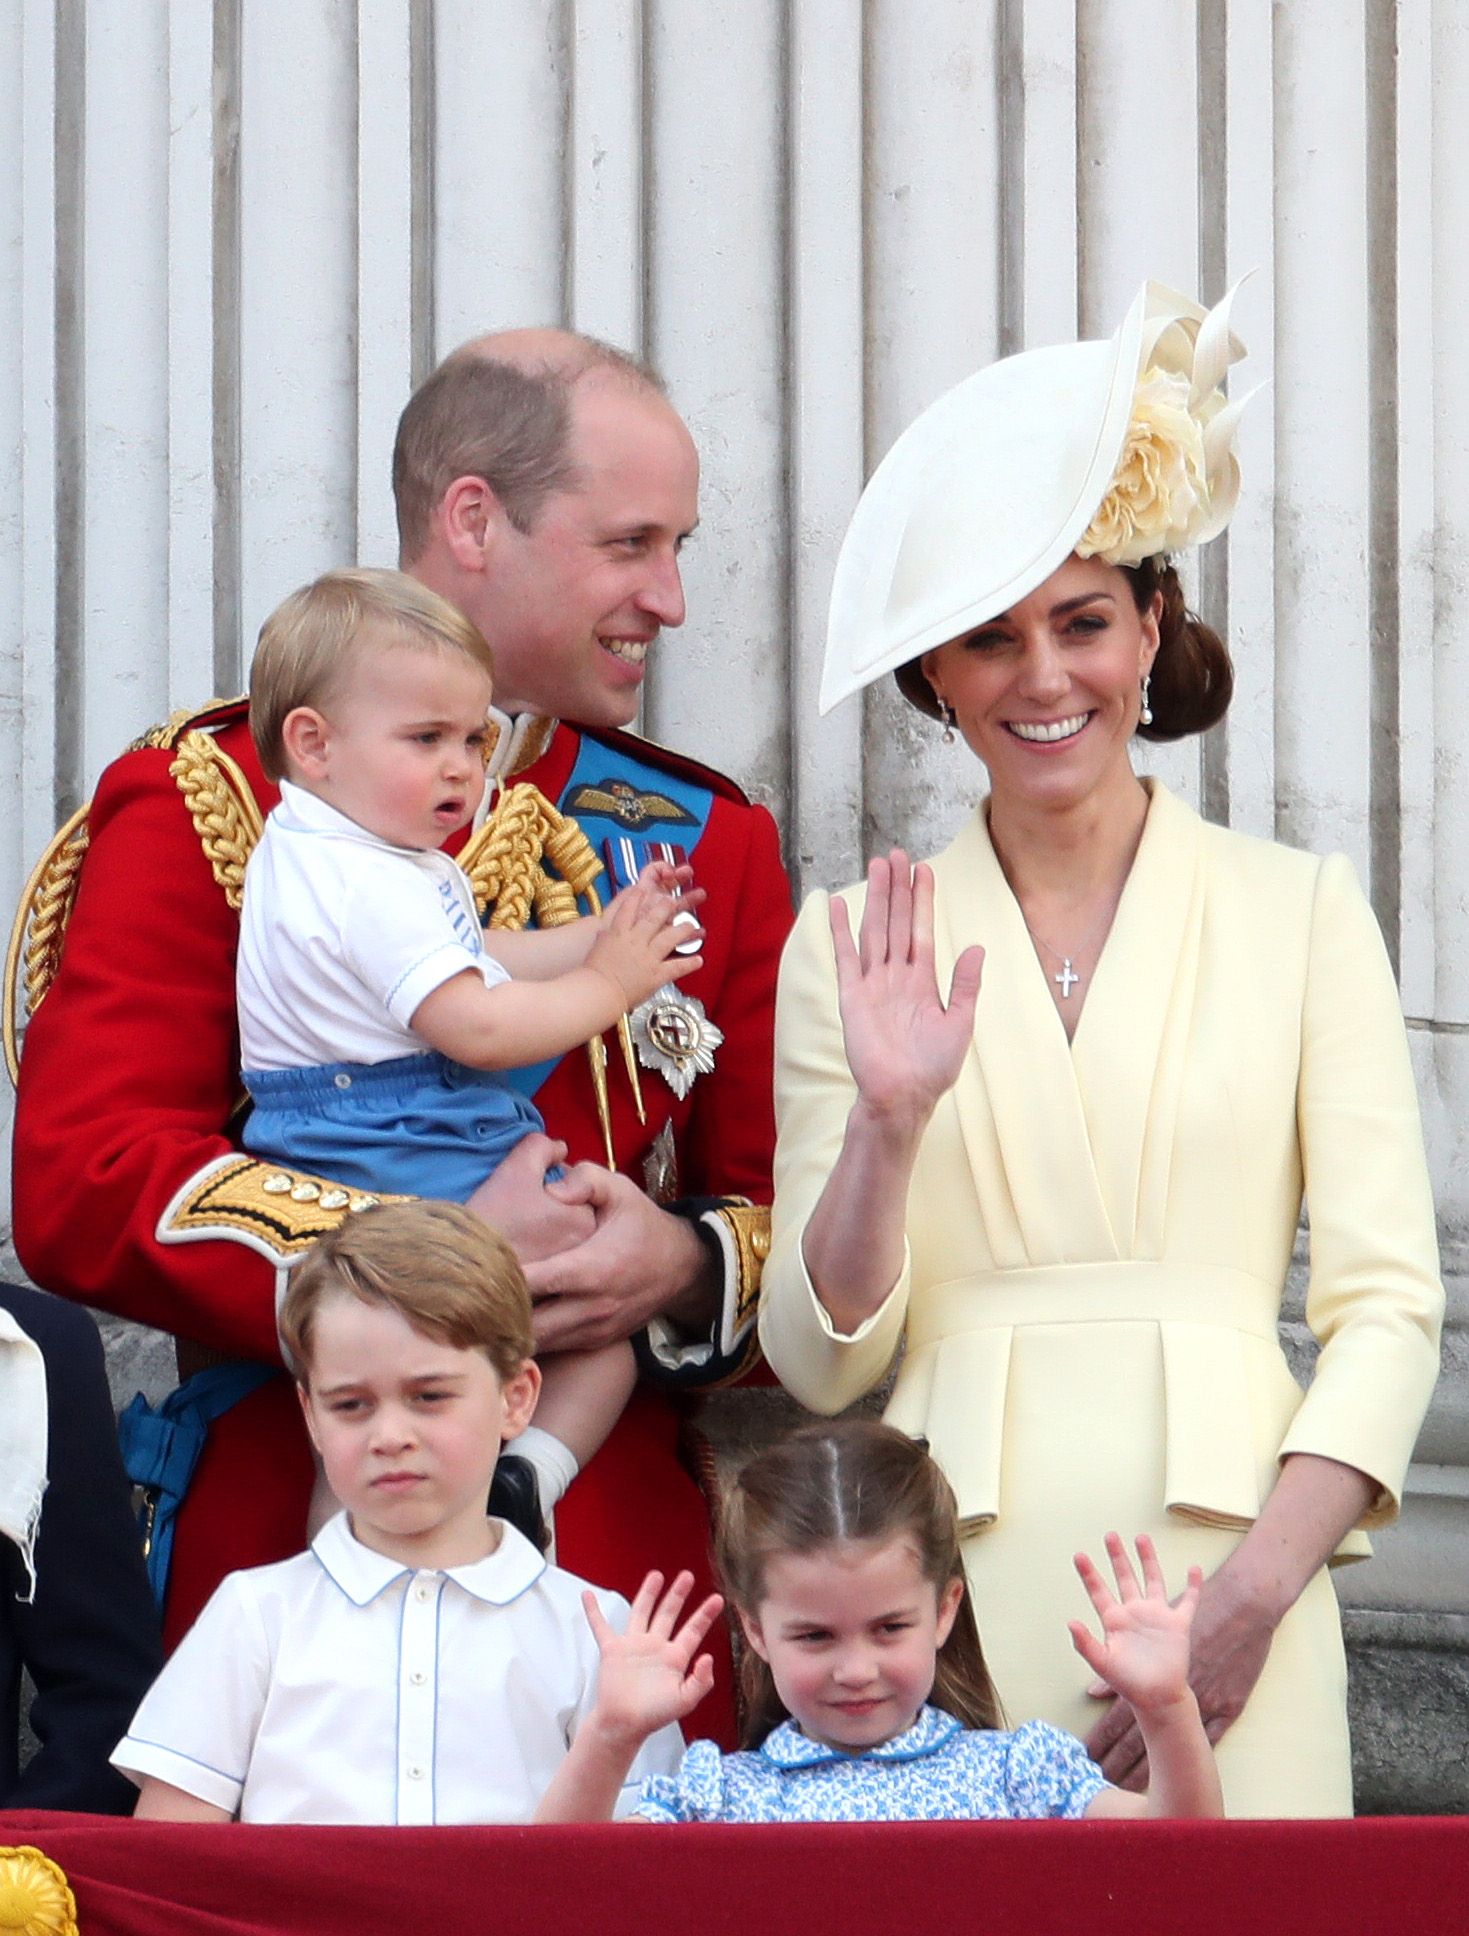 Кейт миддлтон фотошоп с детьми. Принц Уильям и Кейт Миддлтон. Принцесса Кейт и принц Уильям. Принцы Кембриджские Джордж и Луи. Кейт Миддлтон и принц Джордж.